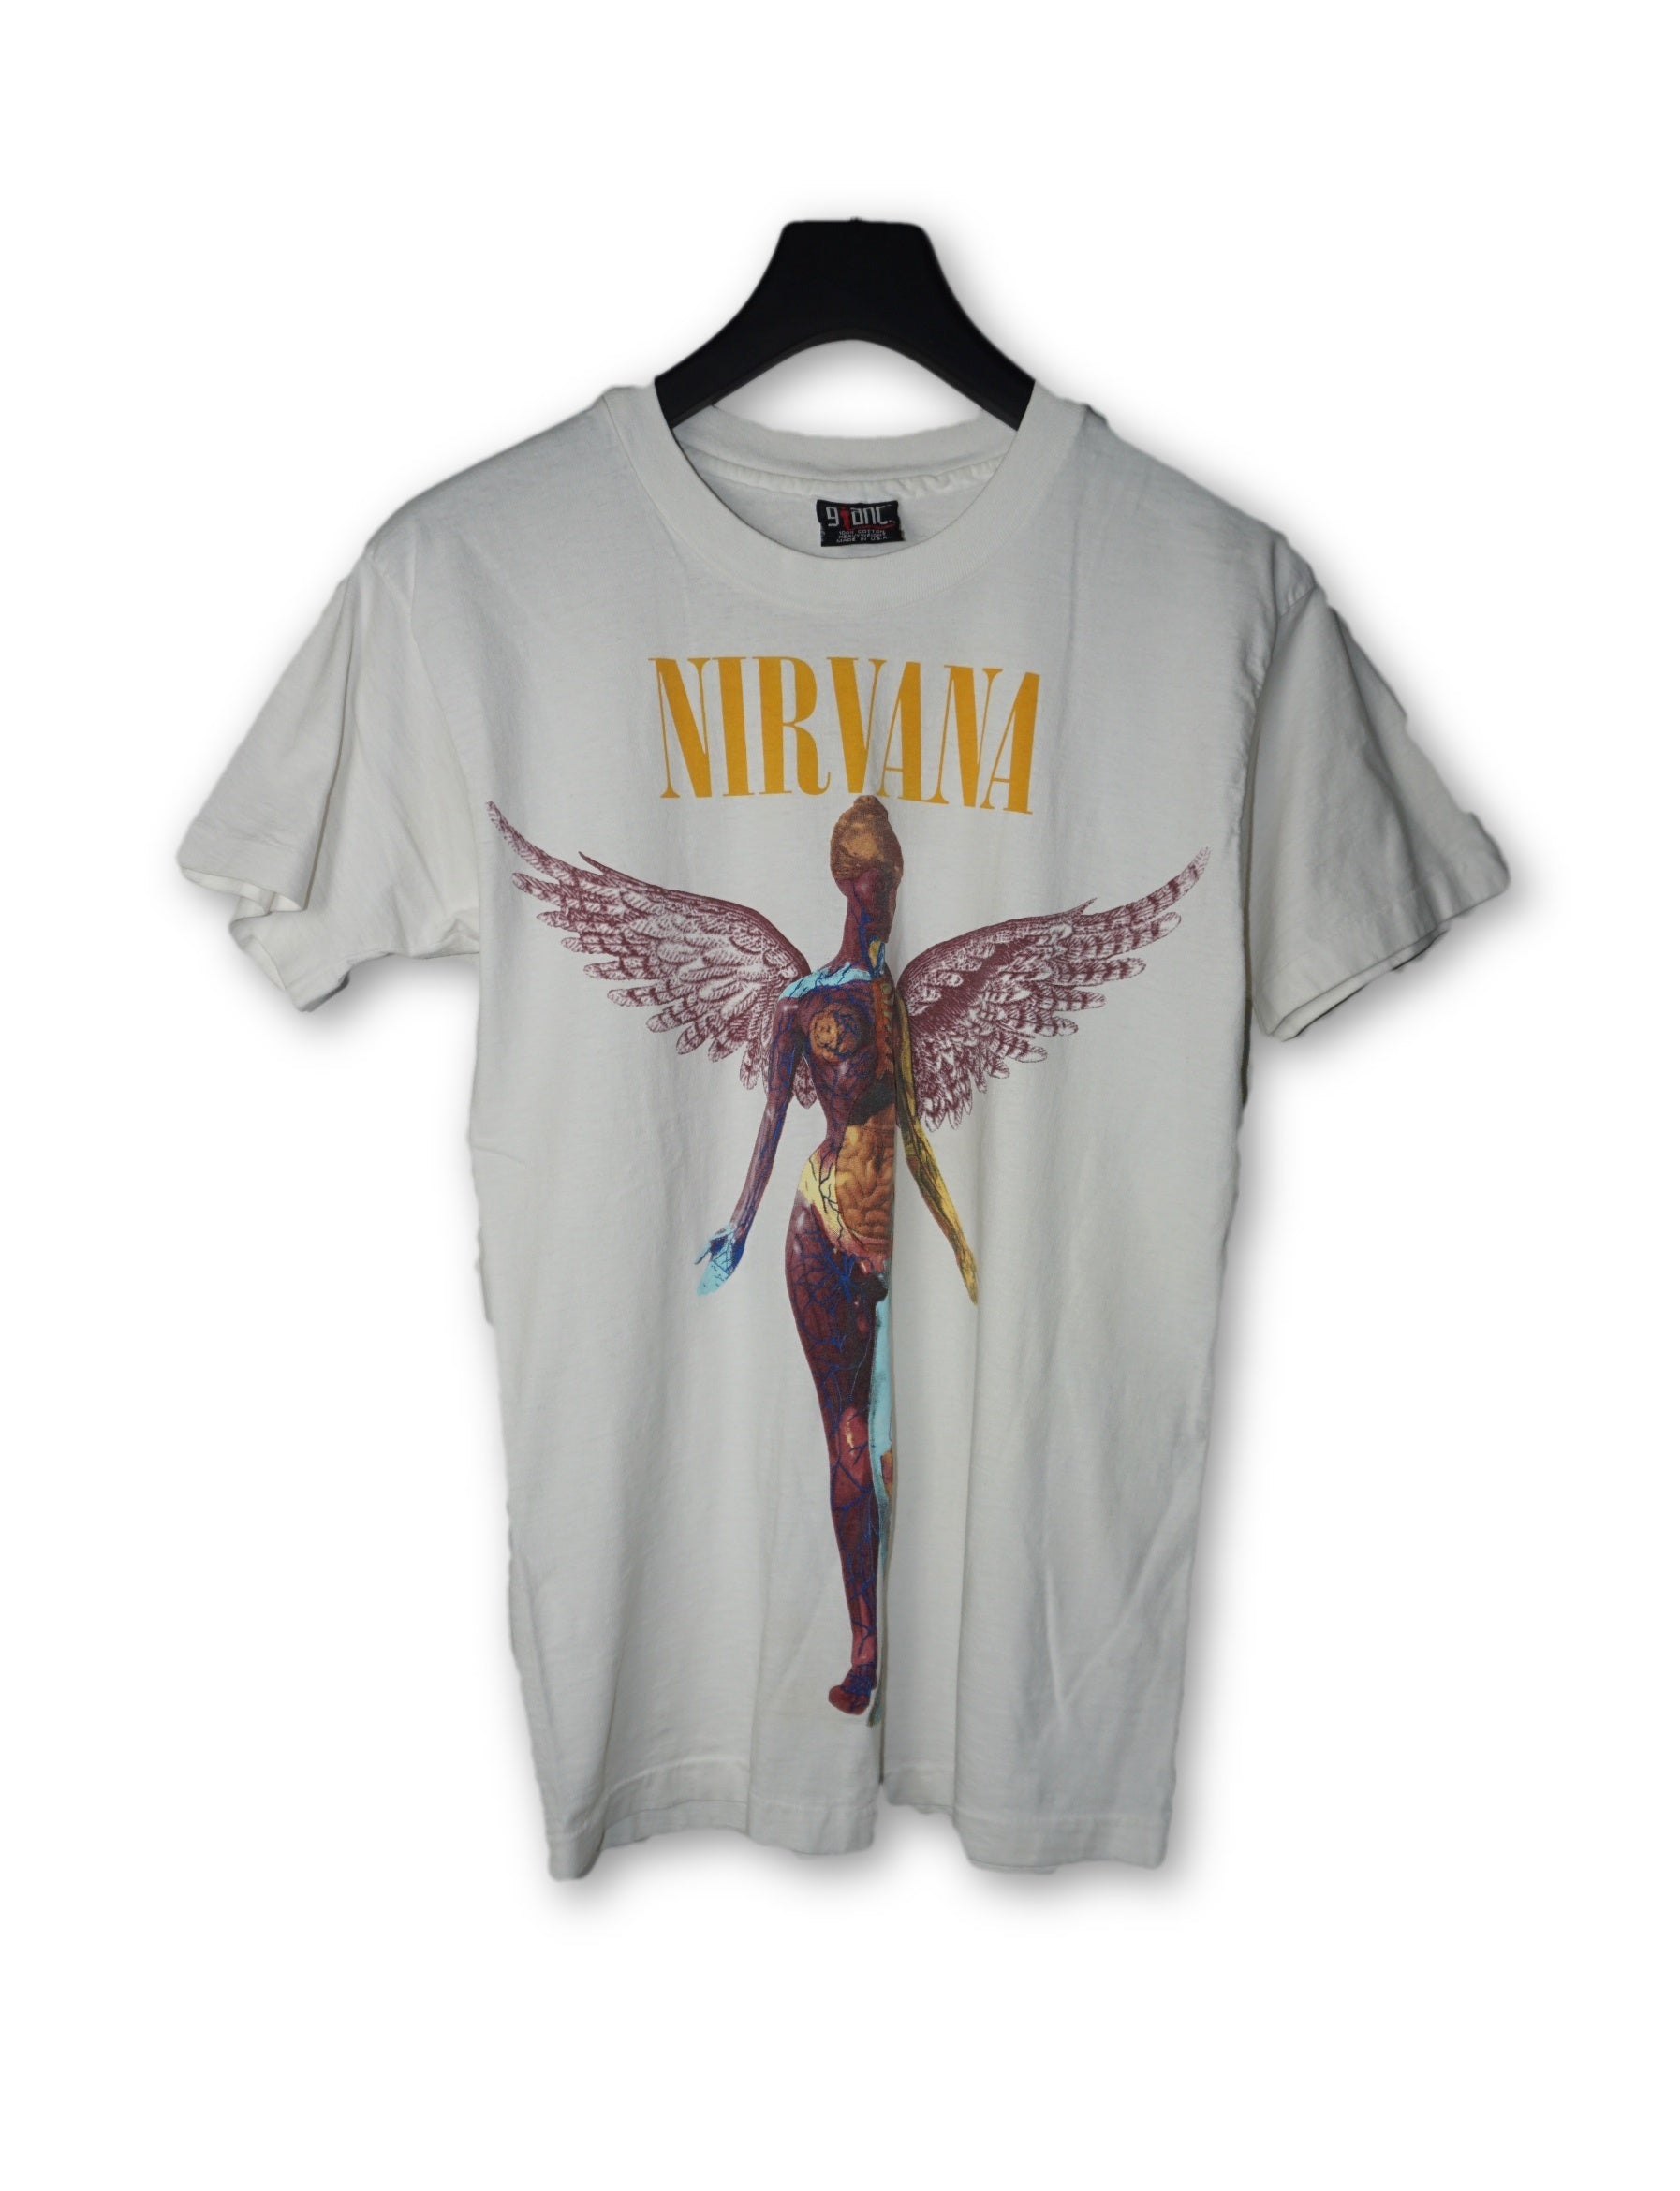 Vintage Nirvana In Utero Kurt Cobain Rock Tee L